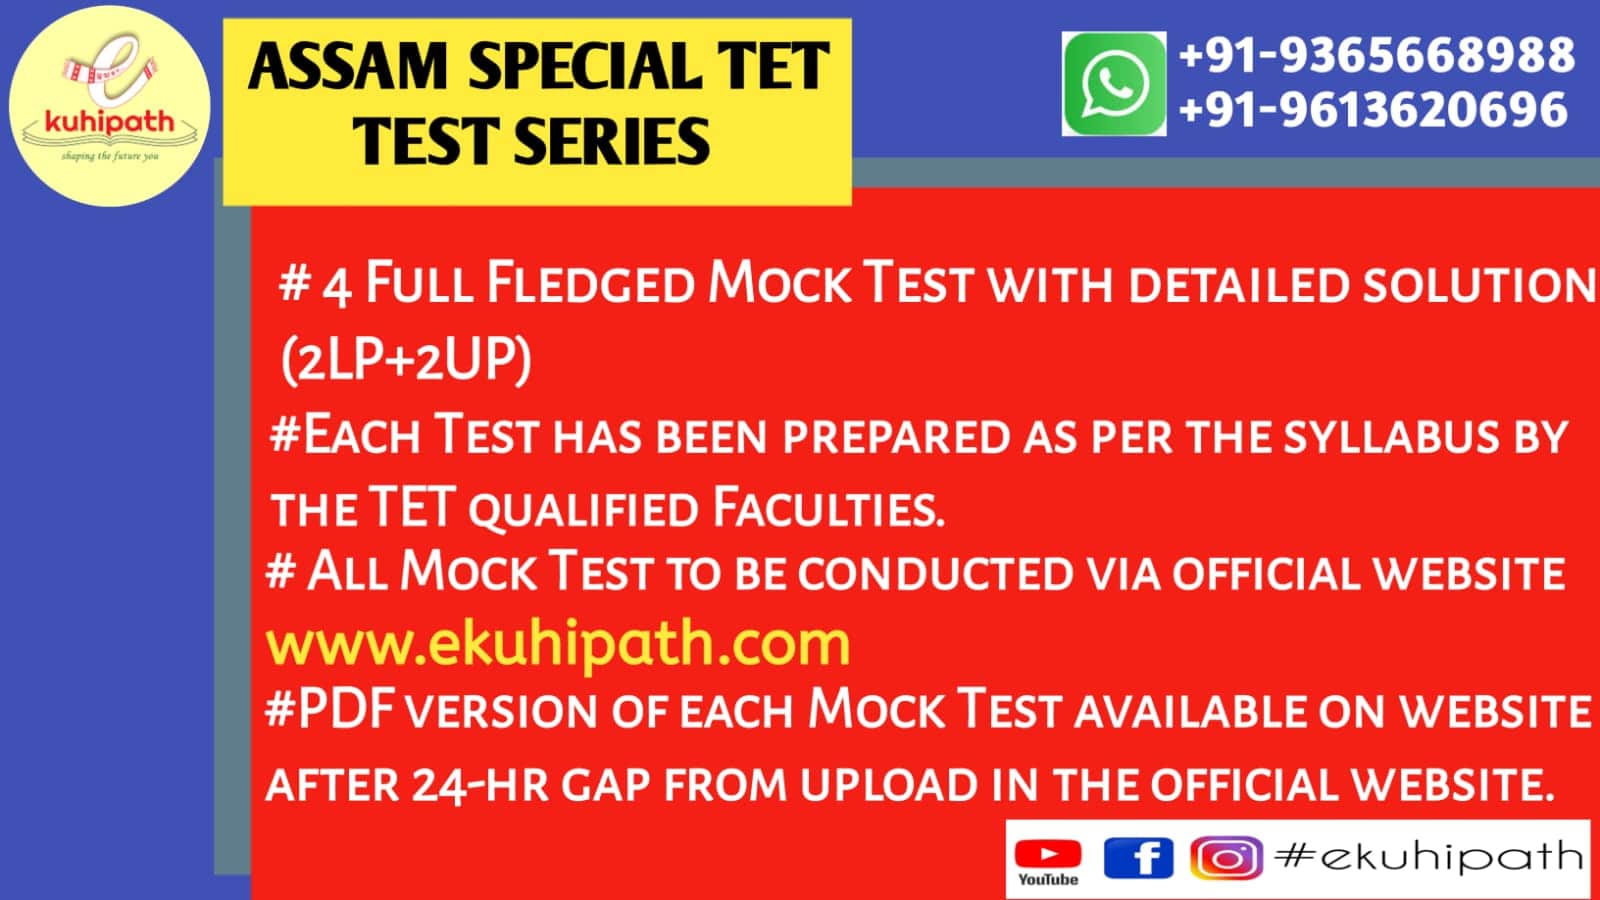 Assam Special TET 'eKuhipath Test Series'